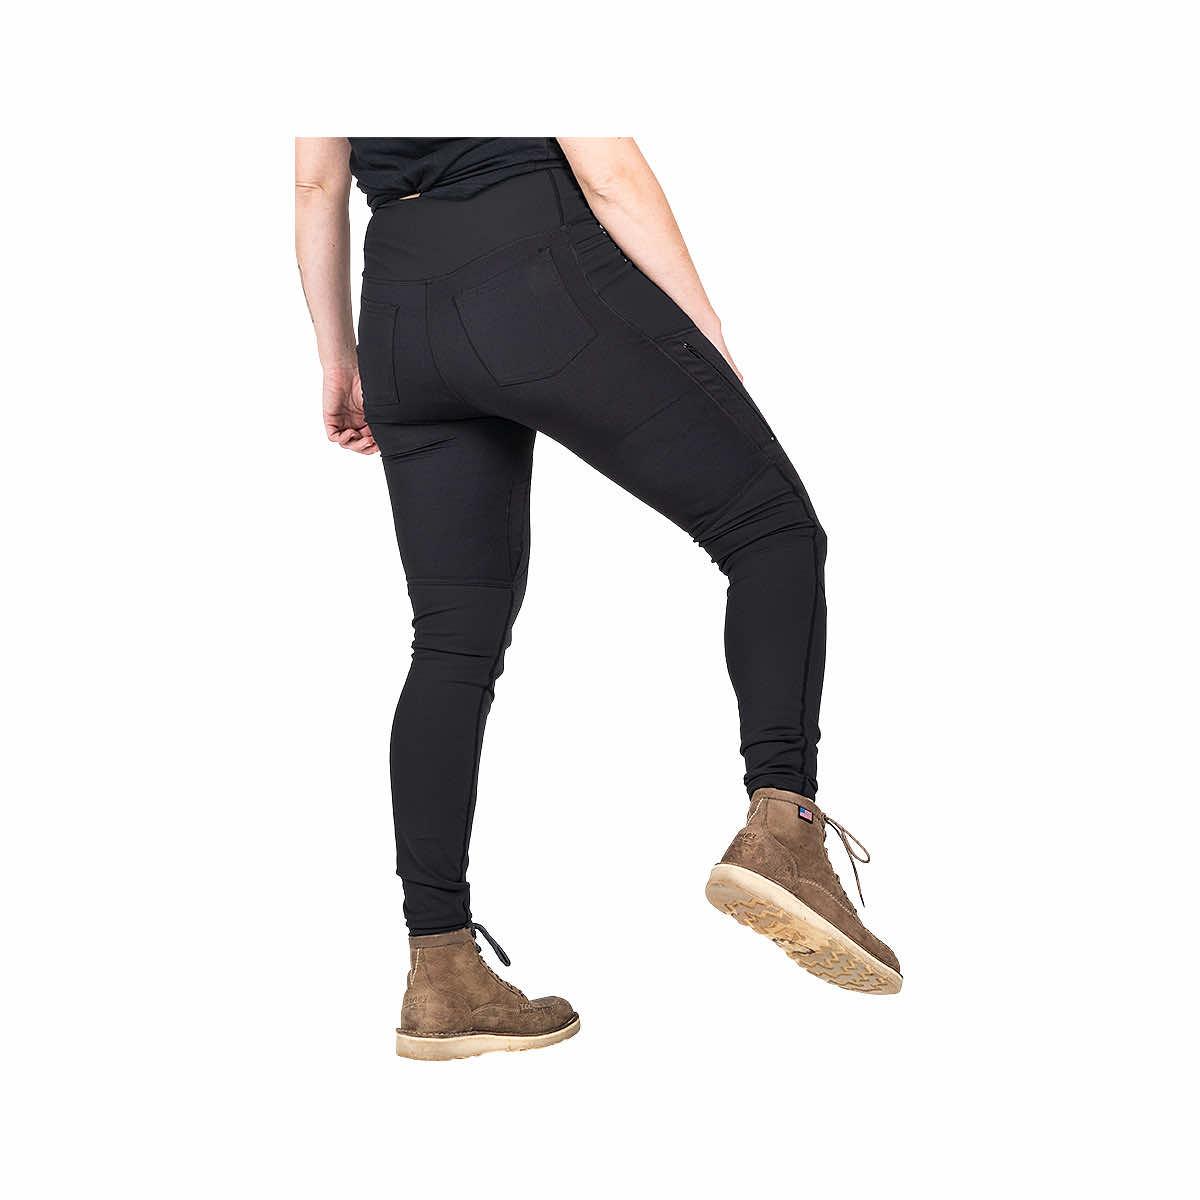 Dovetail Women's Field Utility High-Rise Legging in Black